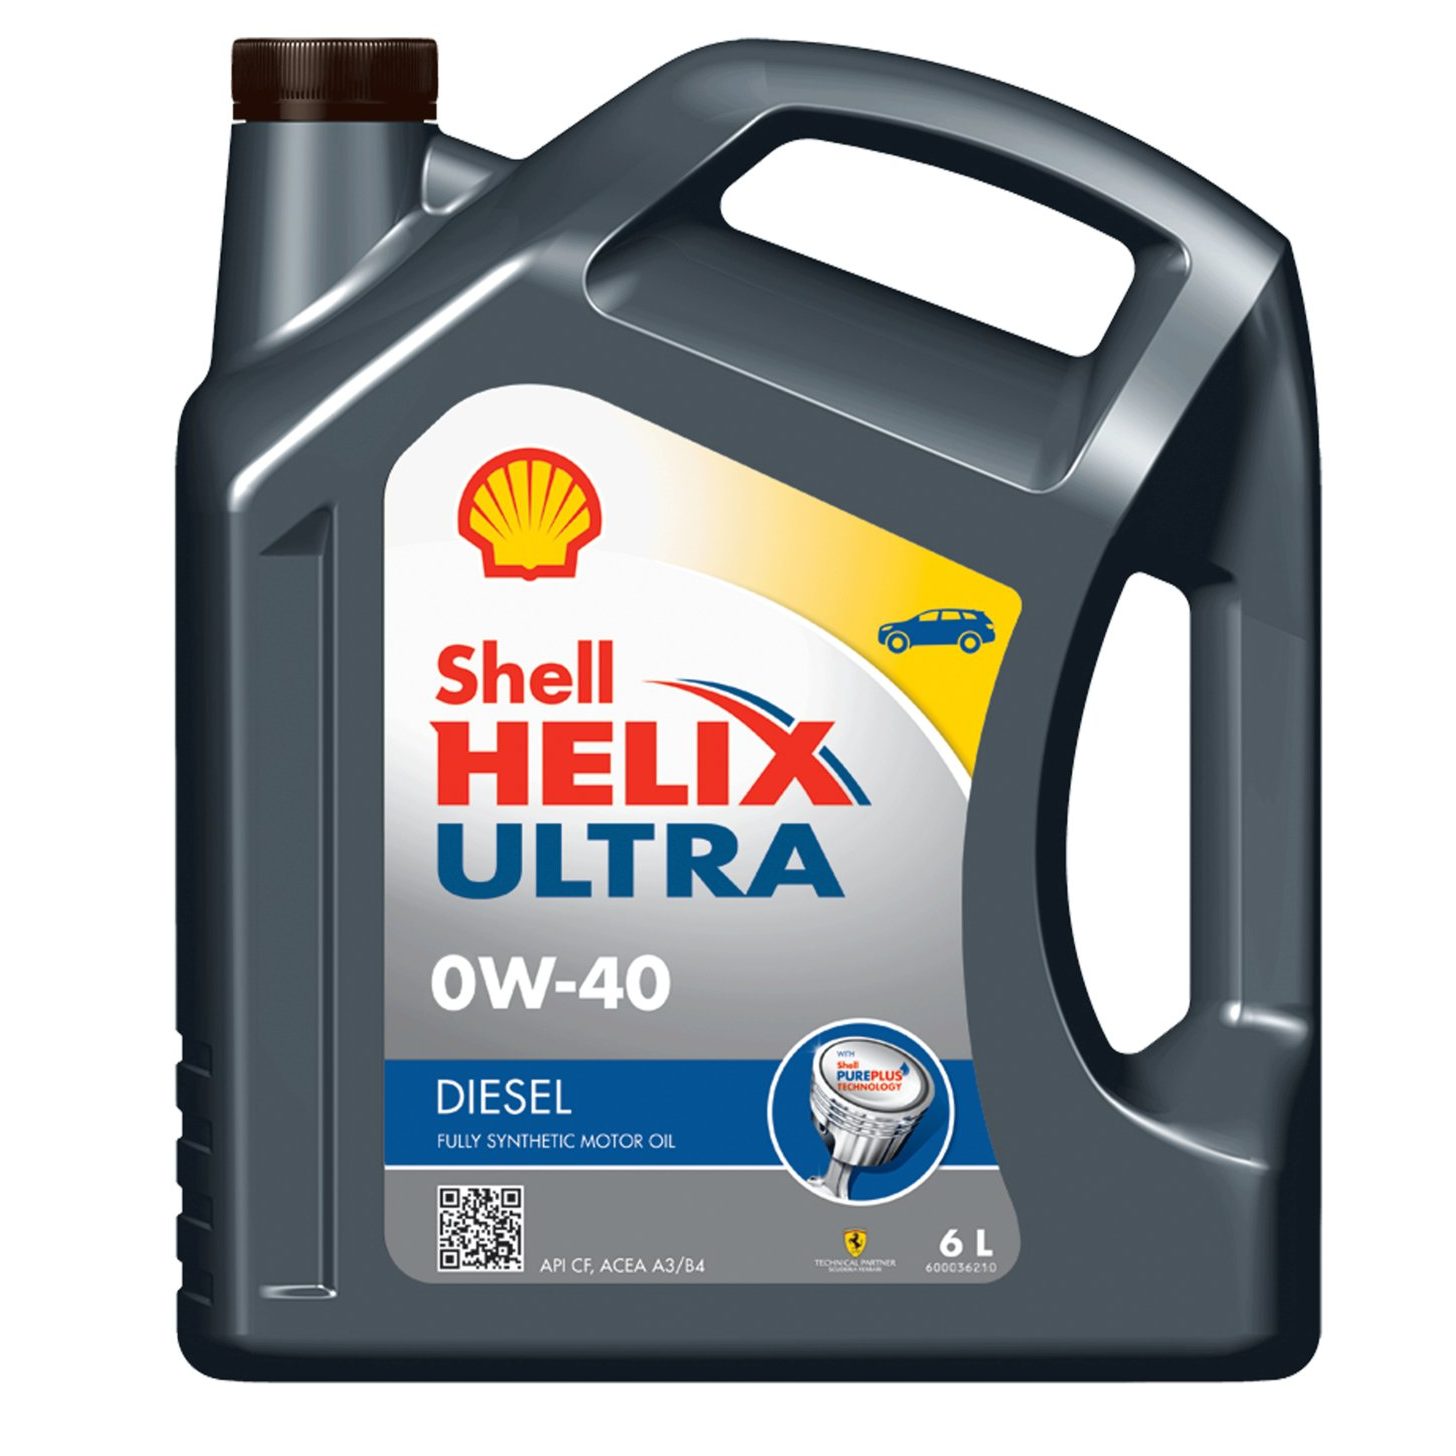 Helix Ultra Diesel OW-40